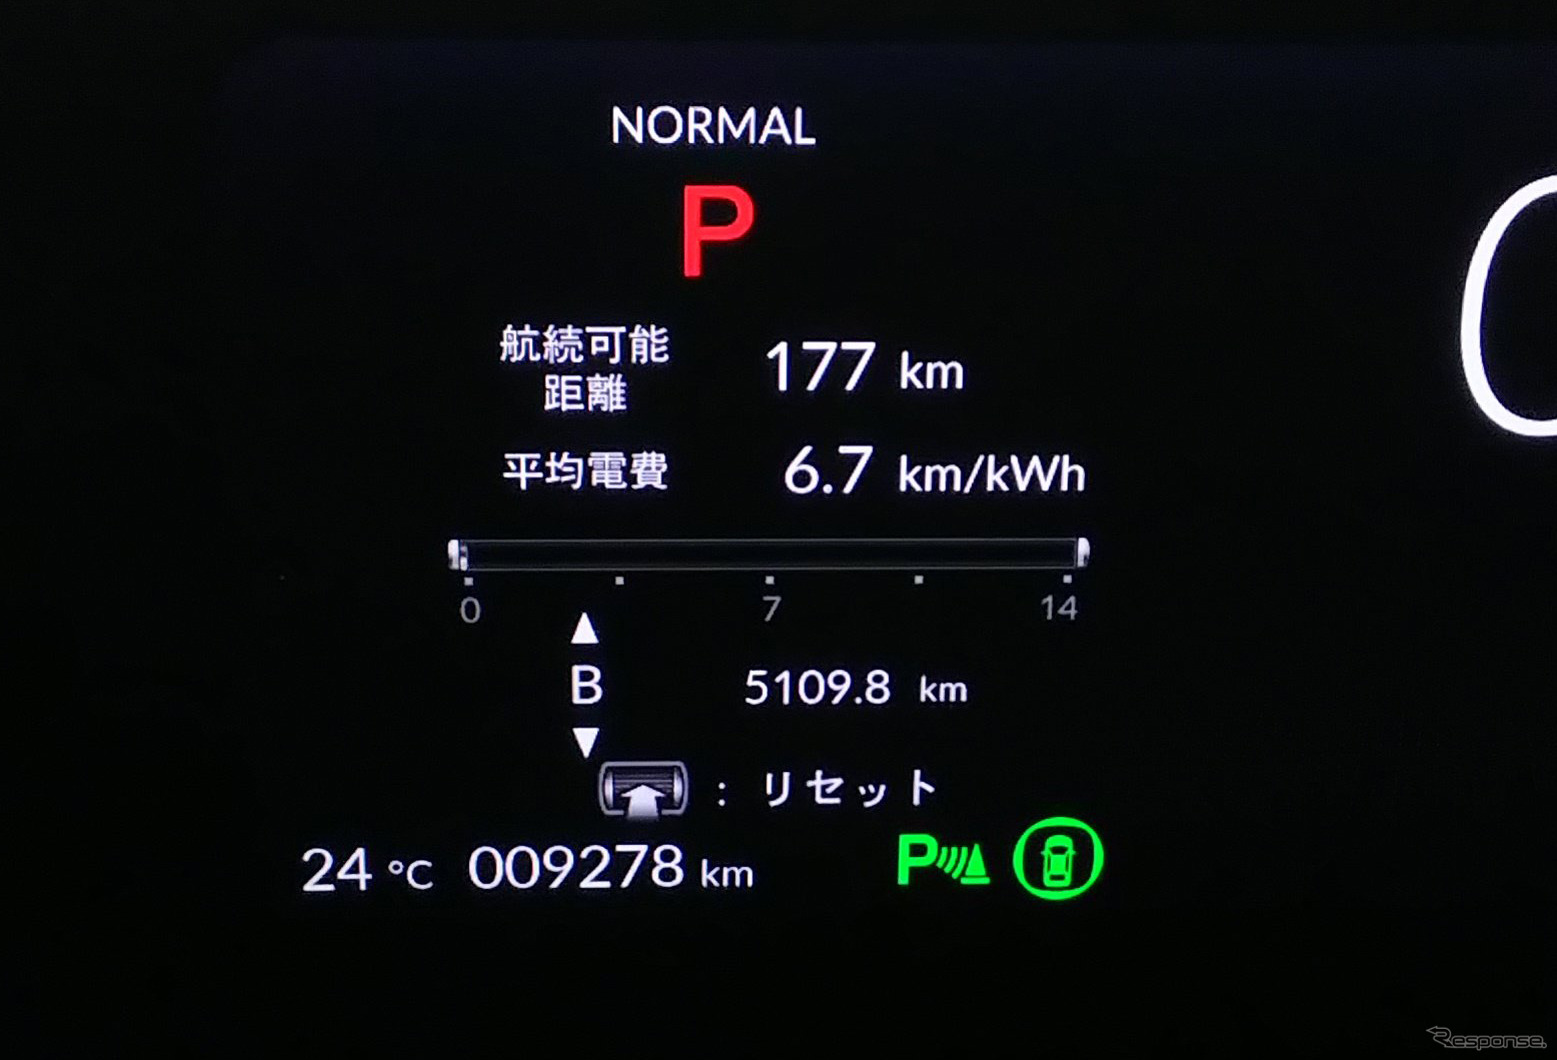 総走行距離5109.8km。オーバーオール電費6.7km/kWh。